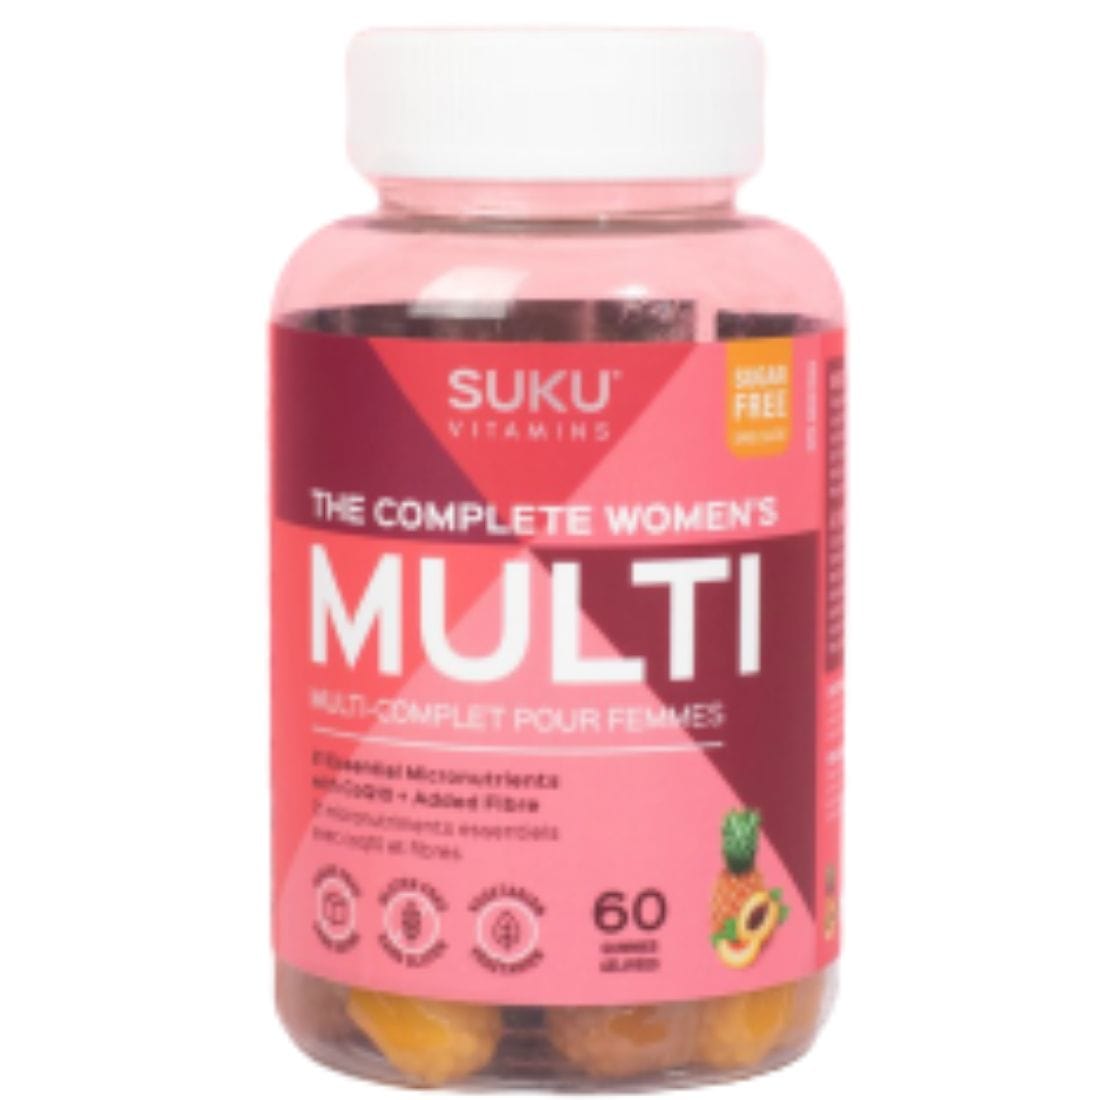 Suku Vitamins The Complete Women's Multivitamin, 60 Gummies (NEW!)